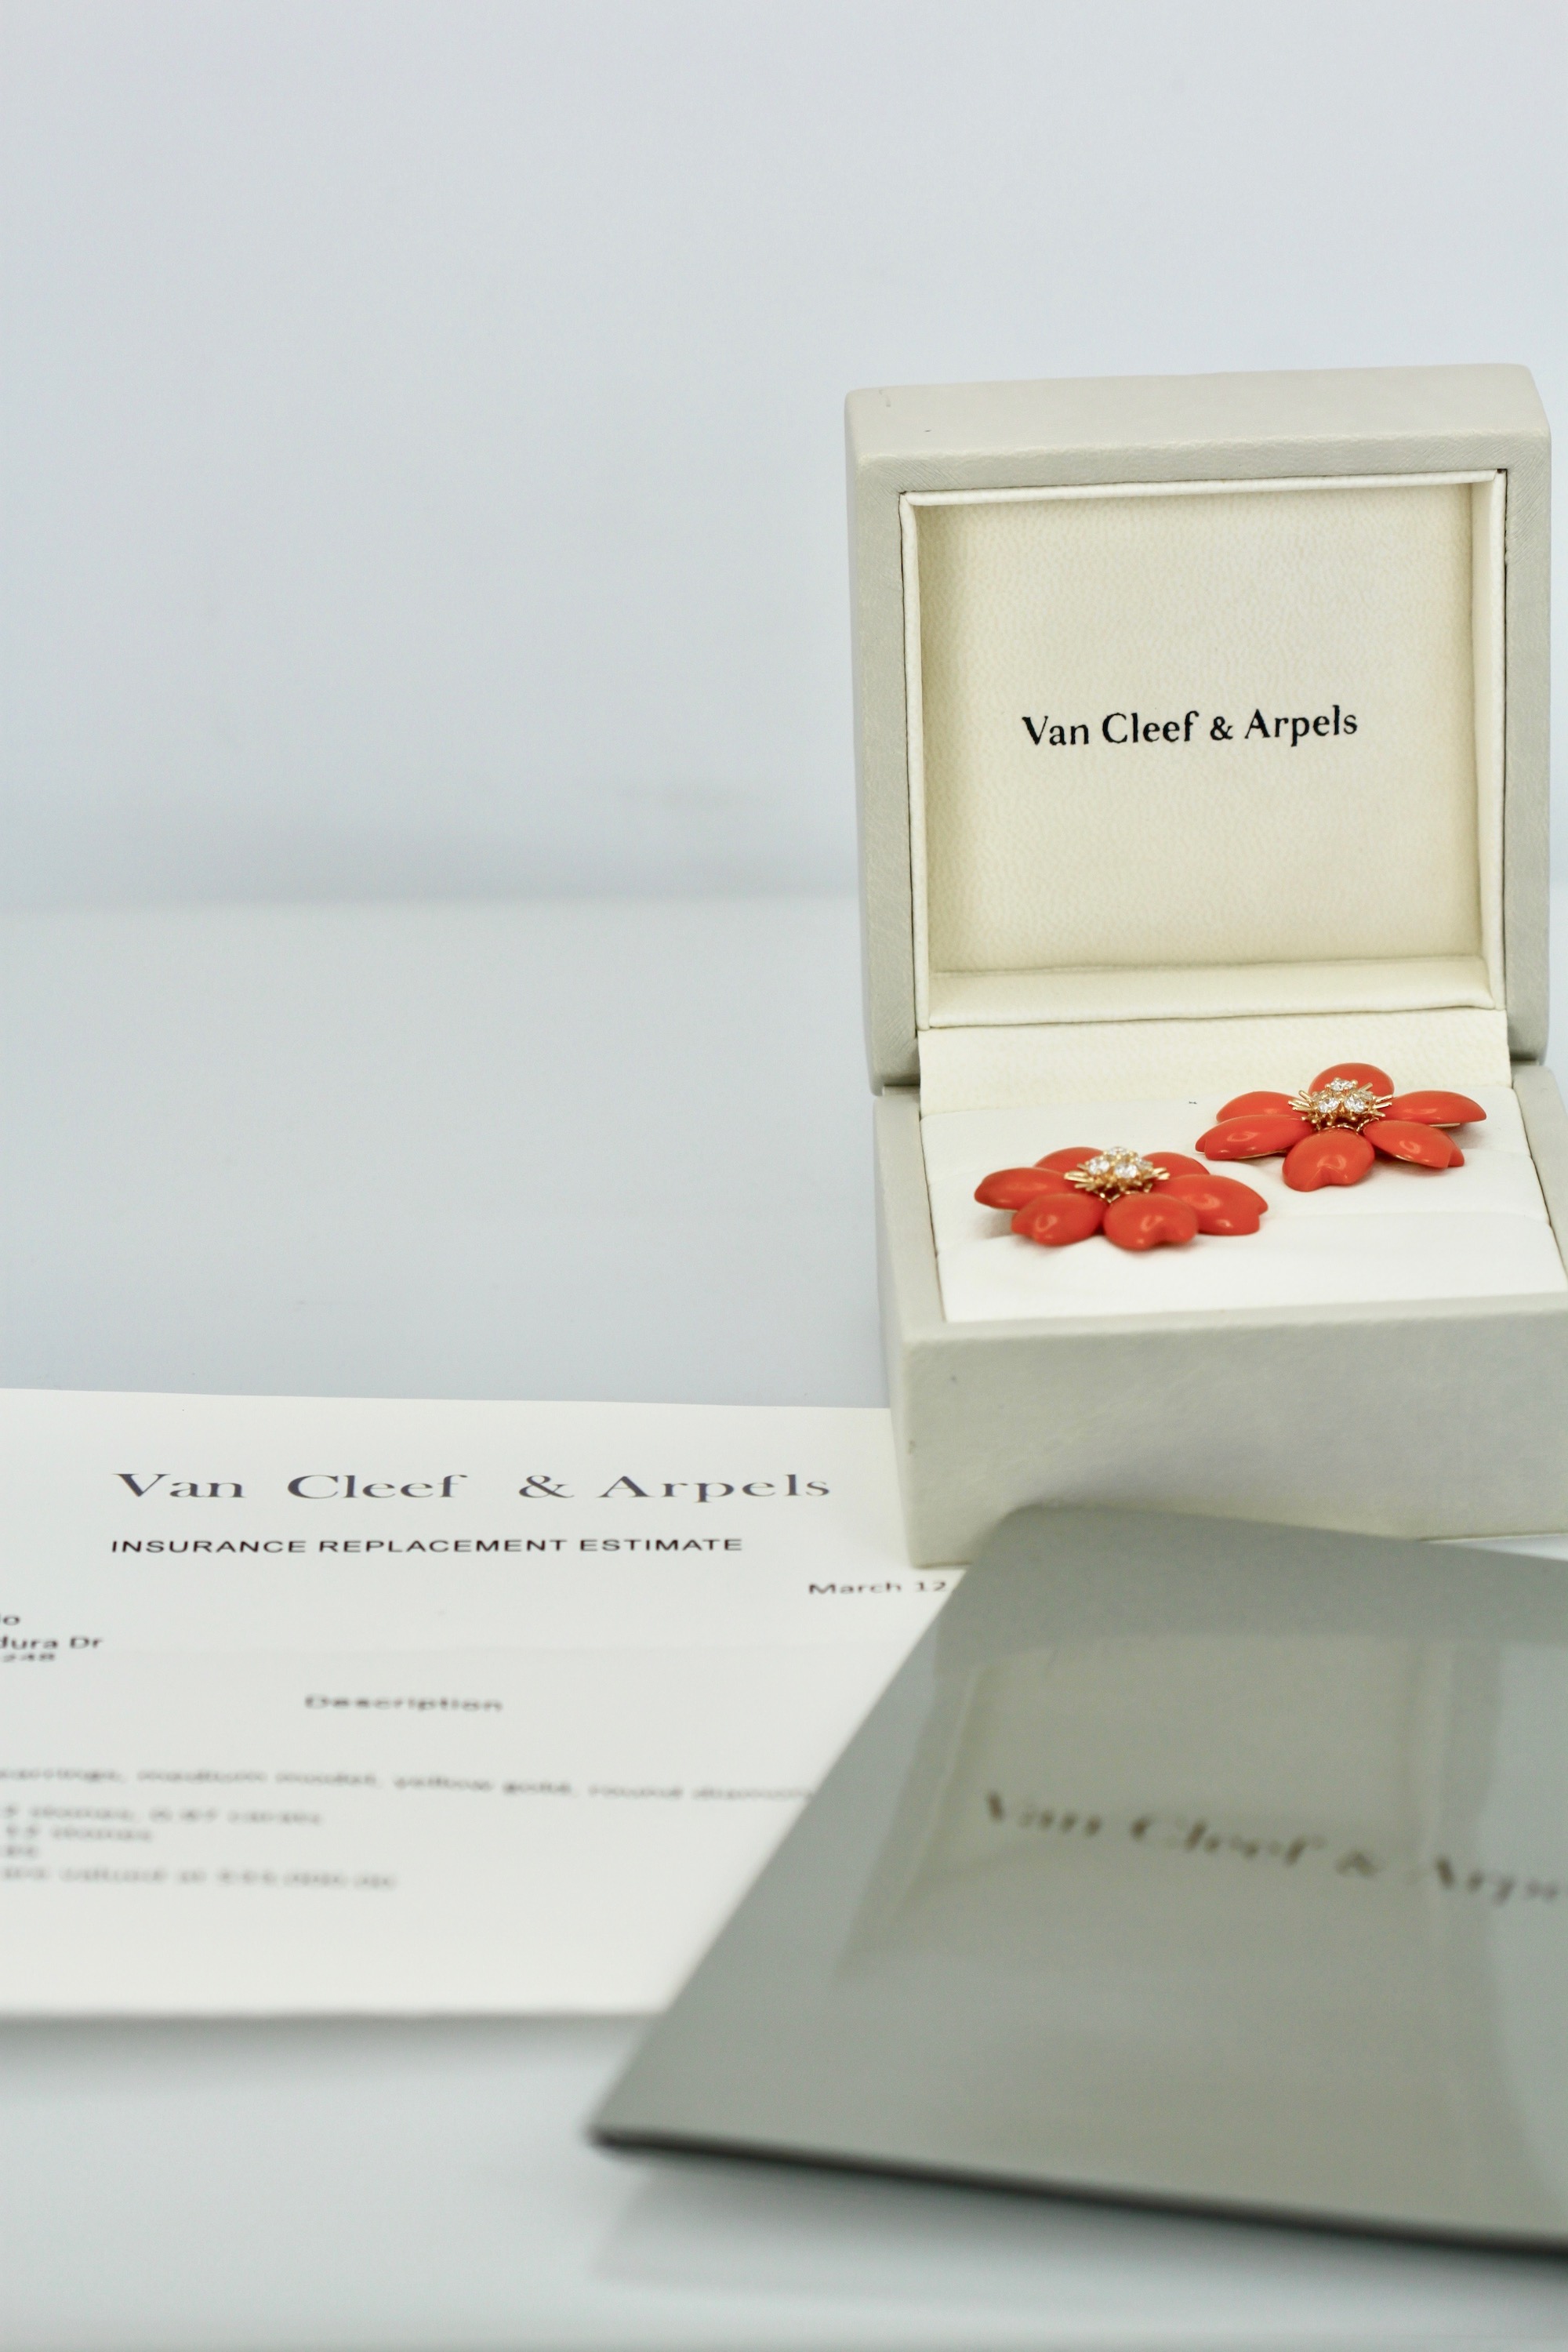 Rose de Noel Coral Diamond Earrings – in box with certificate